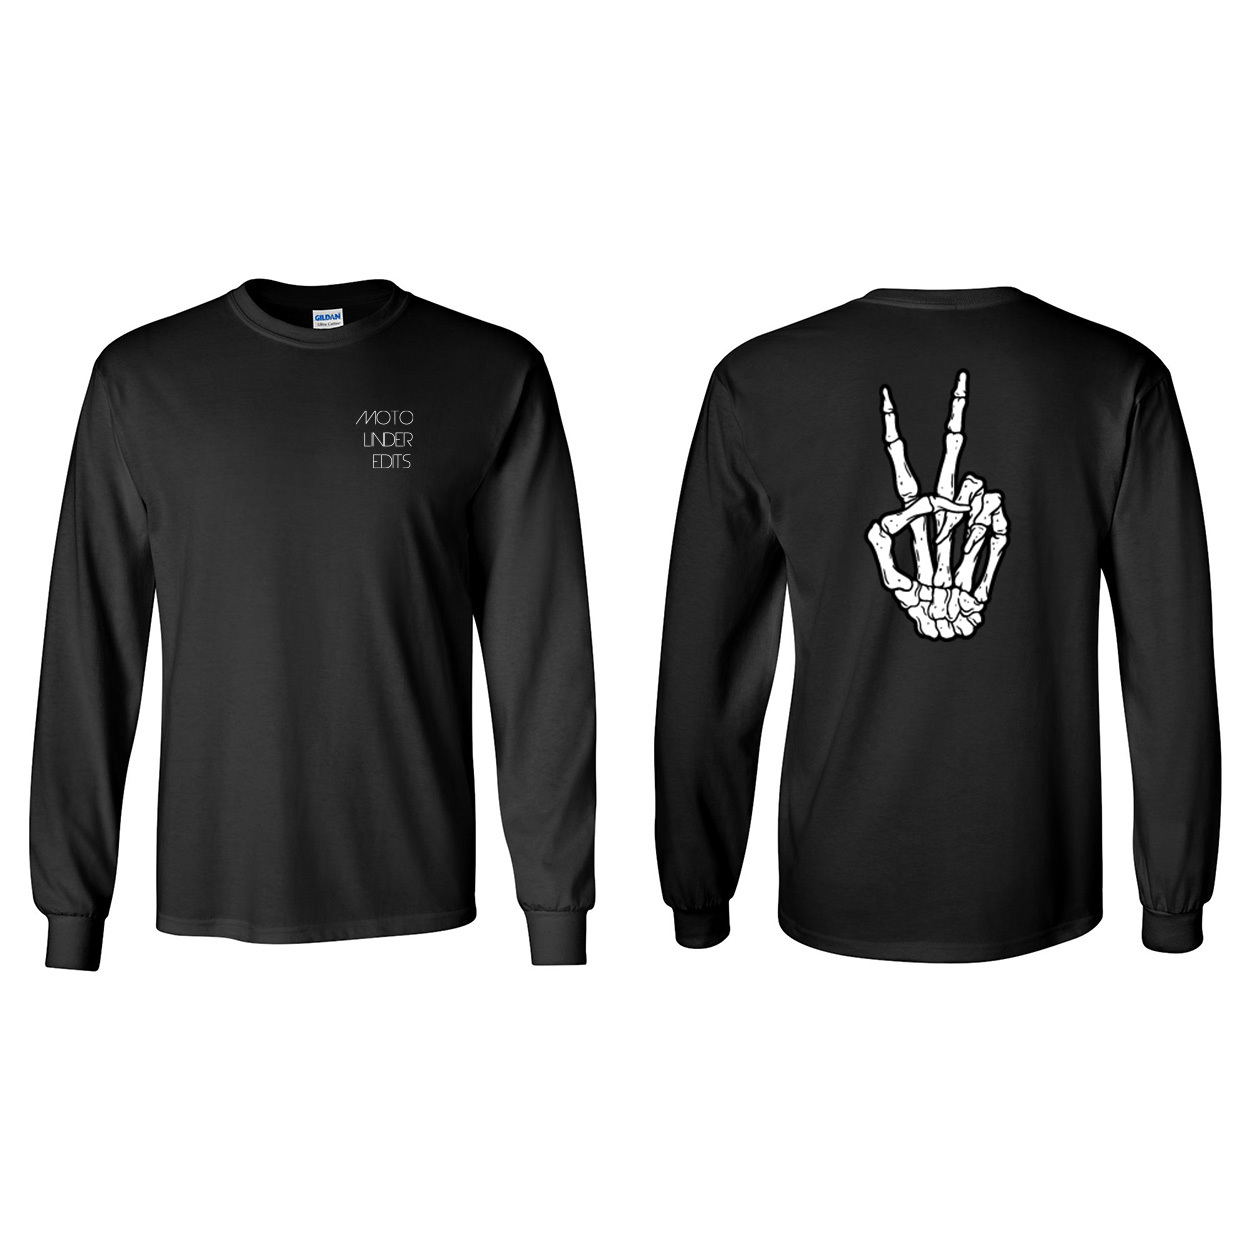 Moto Linder Edits Night Out Skeleton Peace Long Sleeve T-Shirt Black